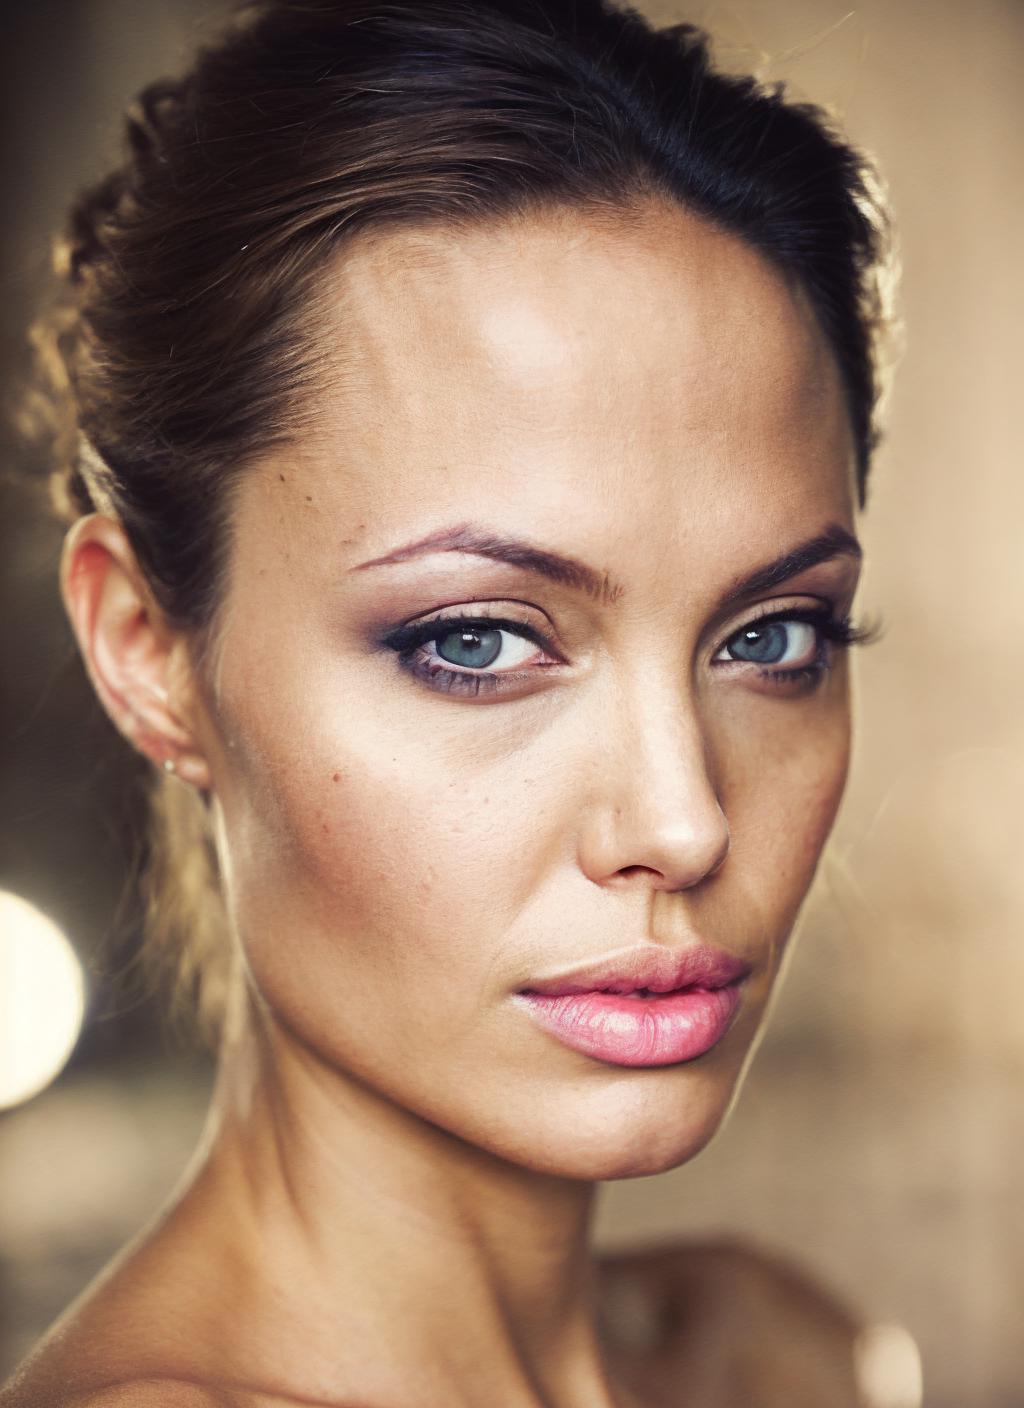 Angelina Jolie image by malcolmrey